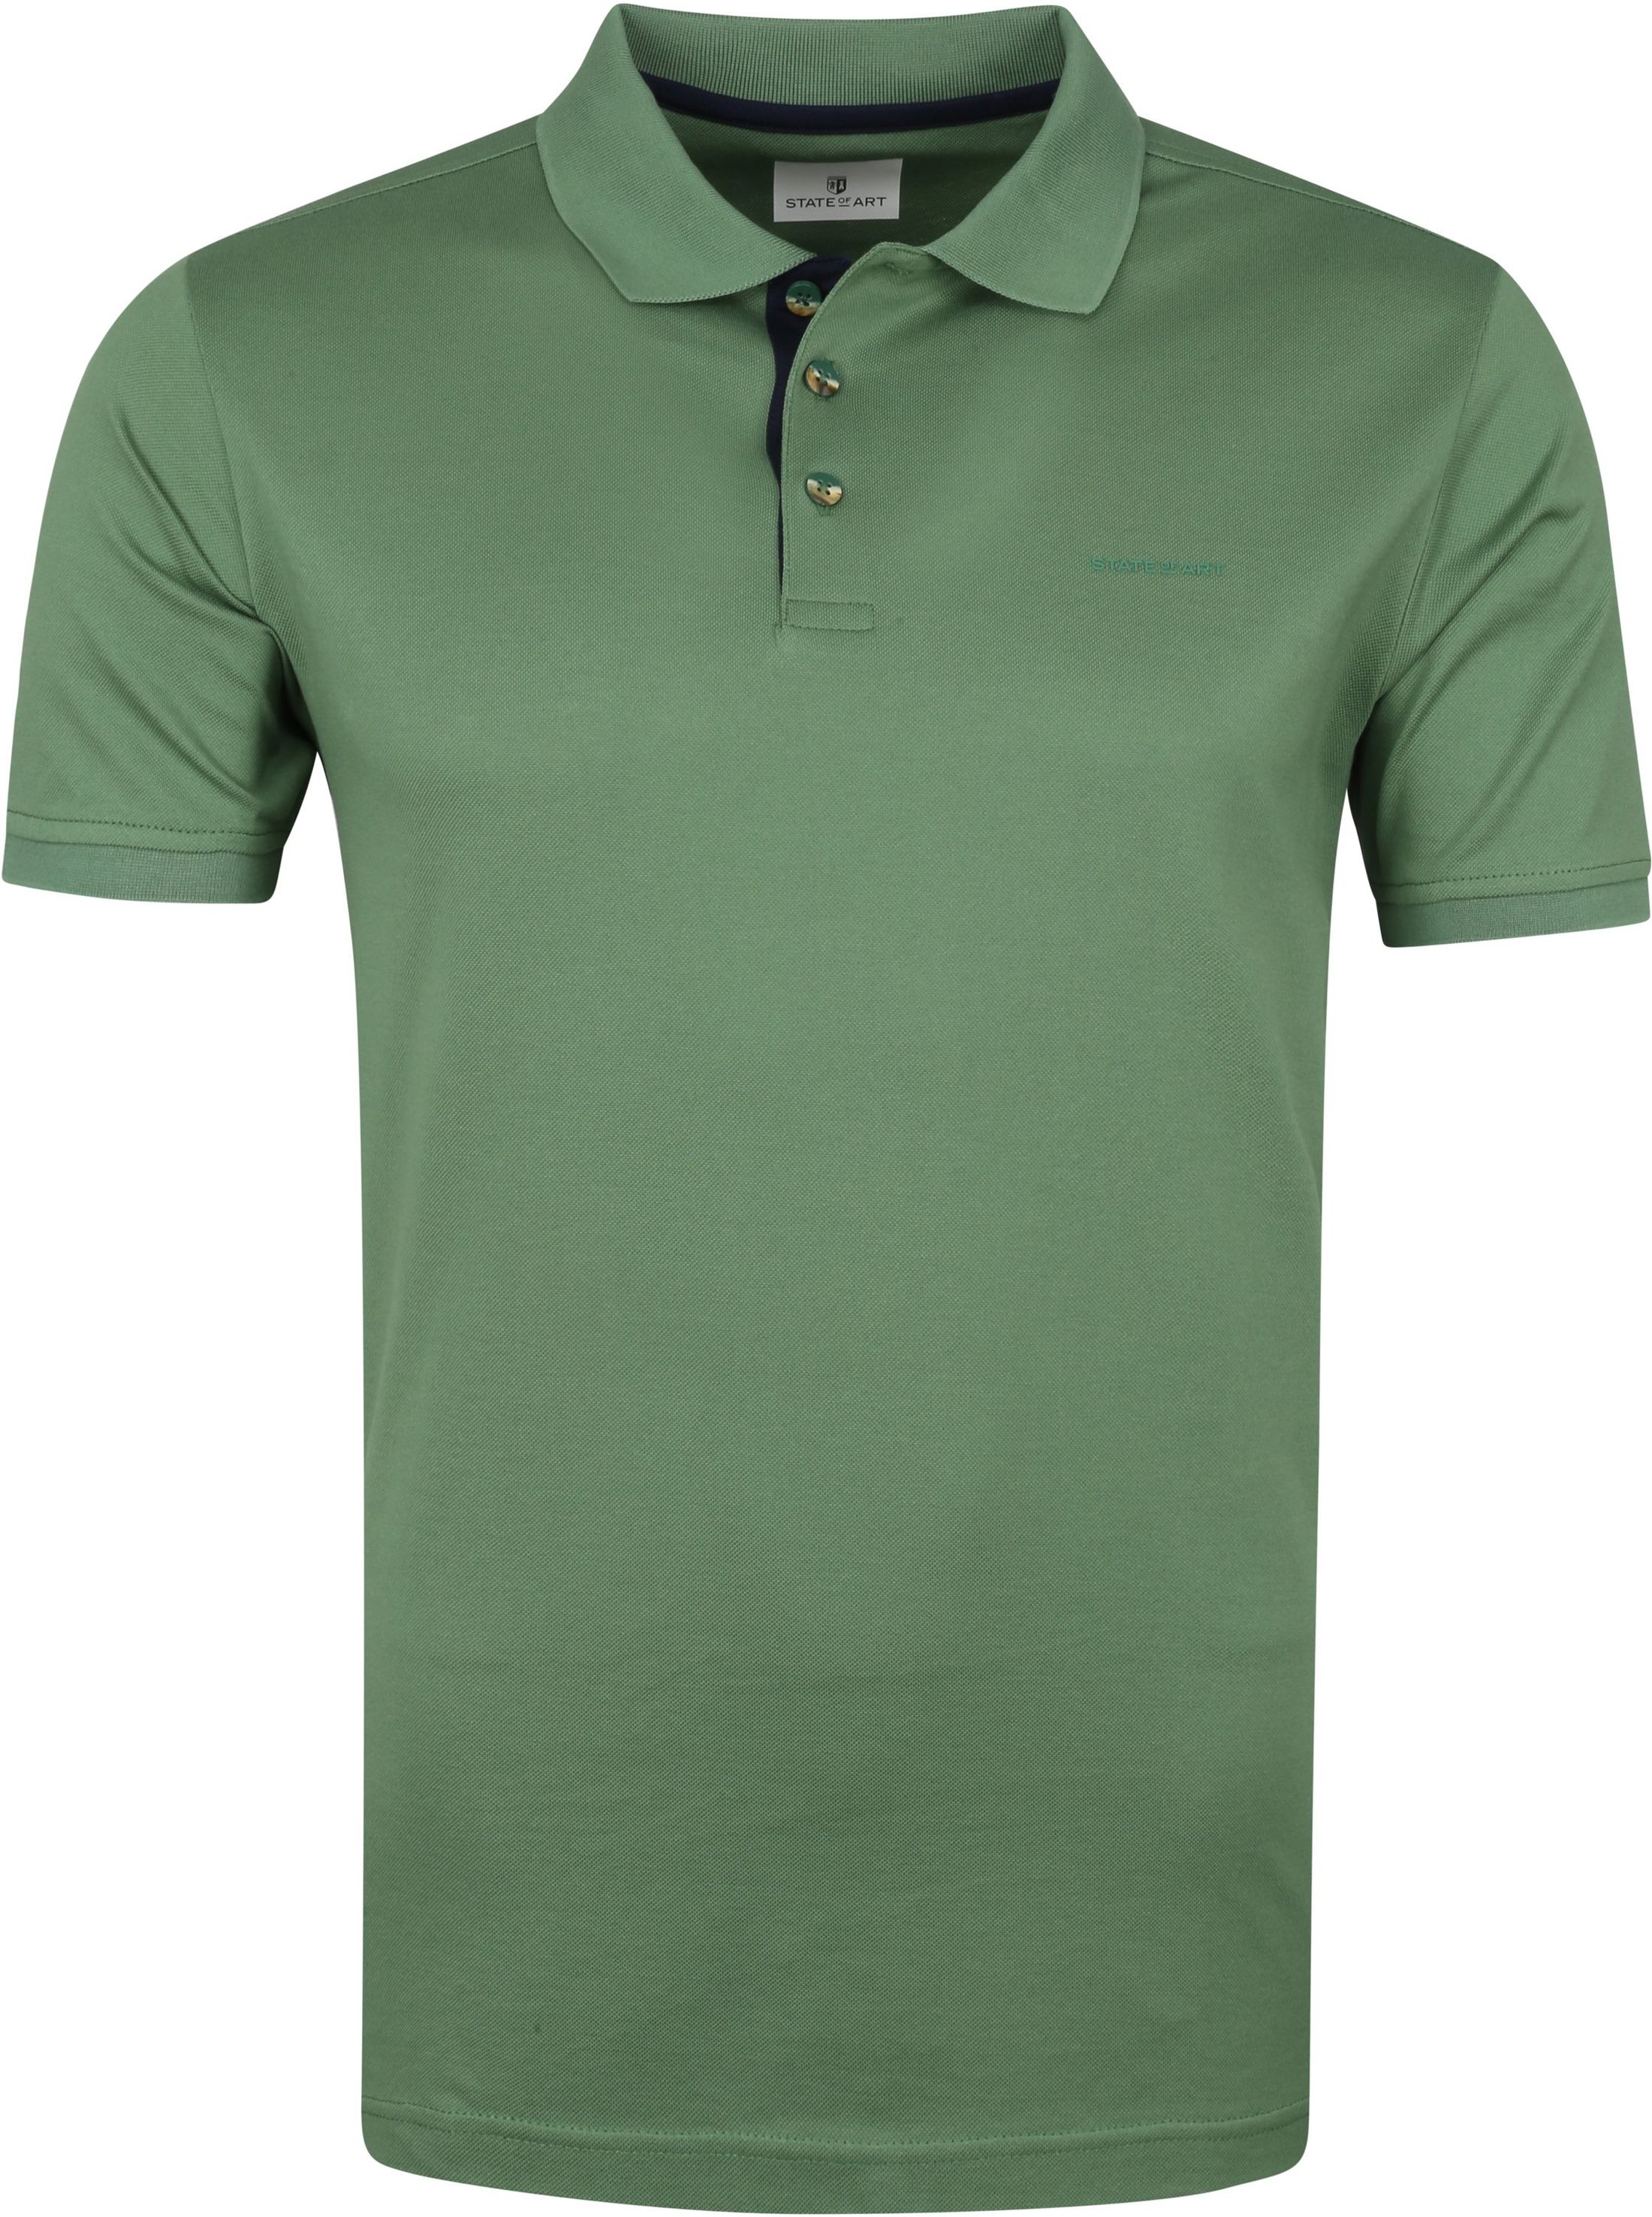 State Of Art Mercerized Pique Polo Shirt Green size 3XL